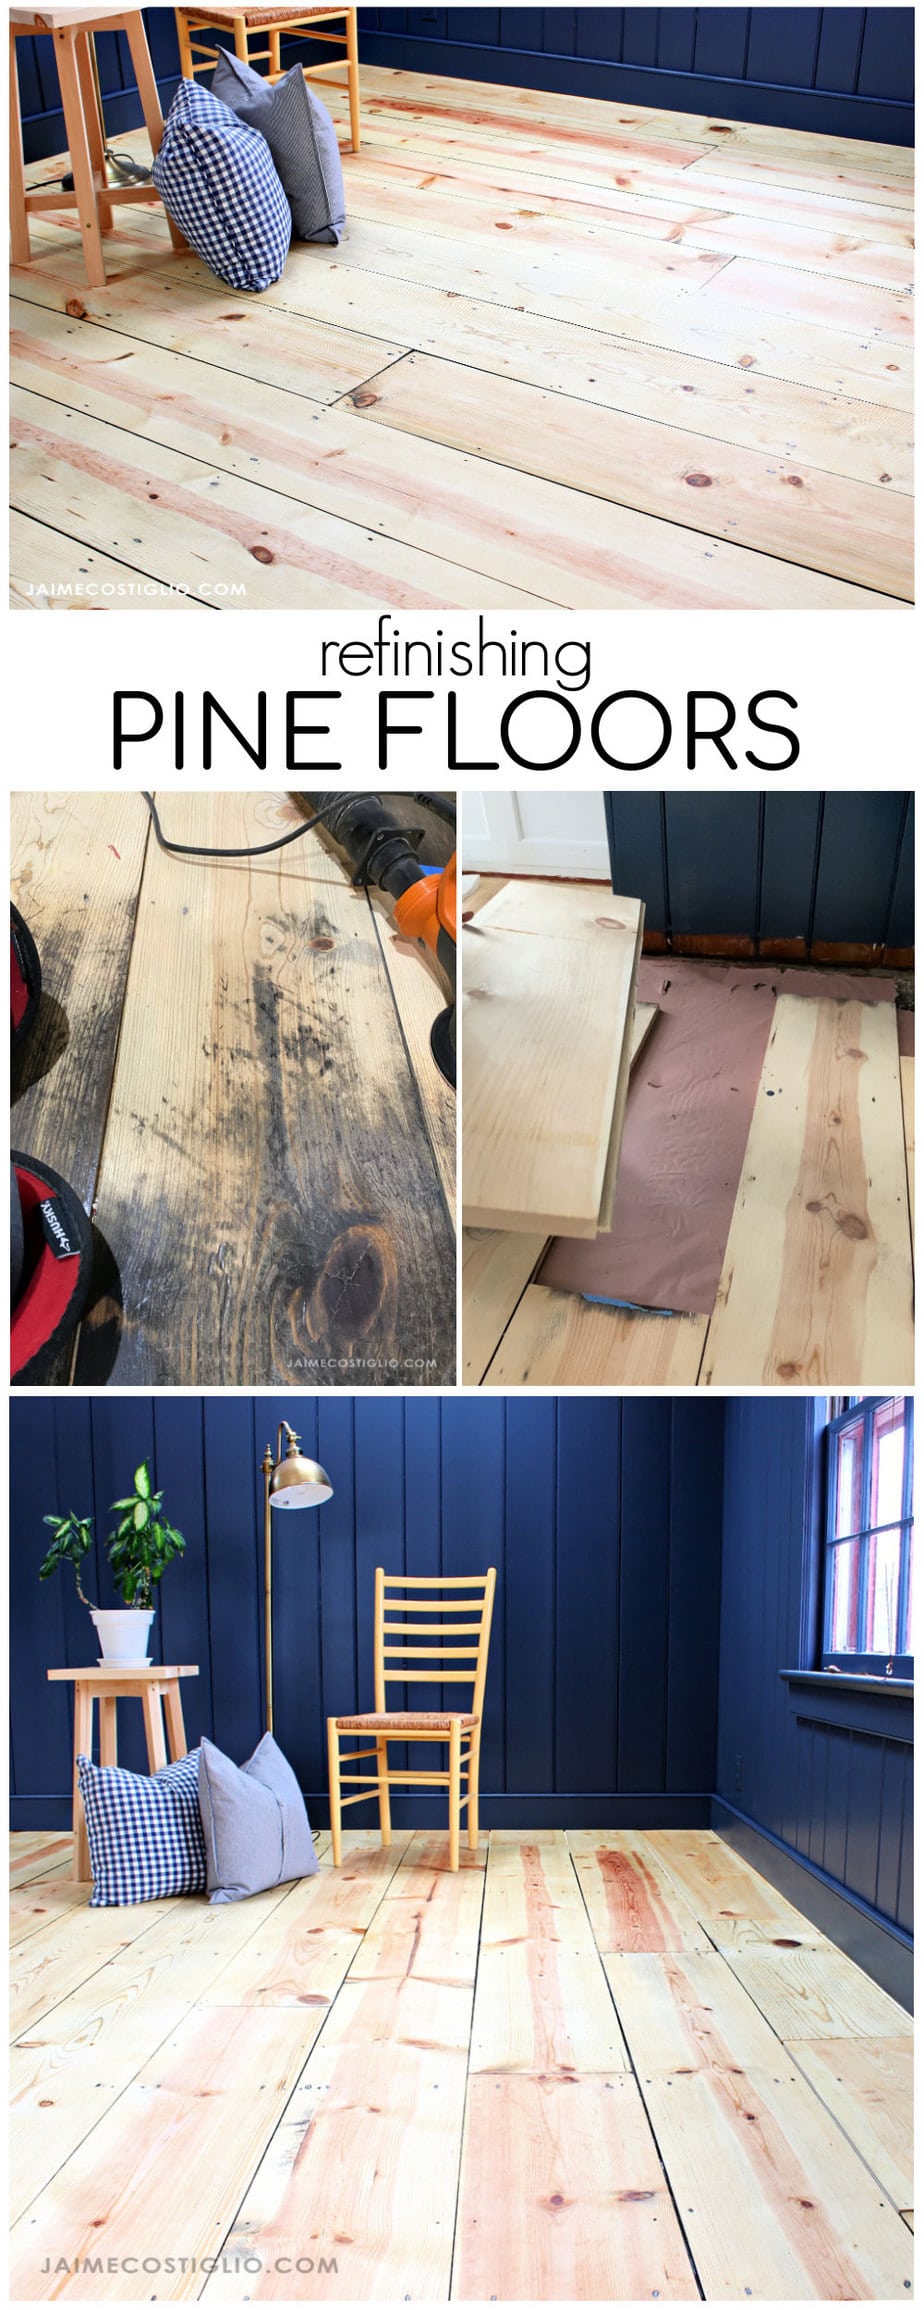 refinishing pine floors collage